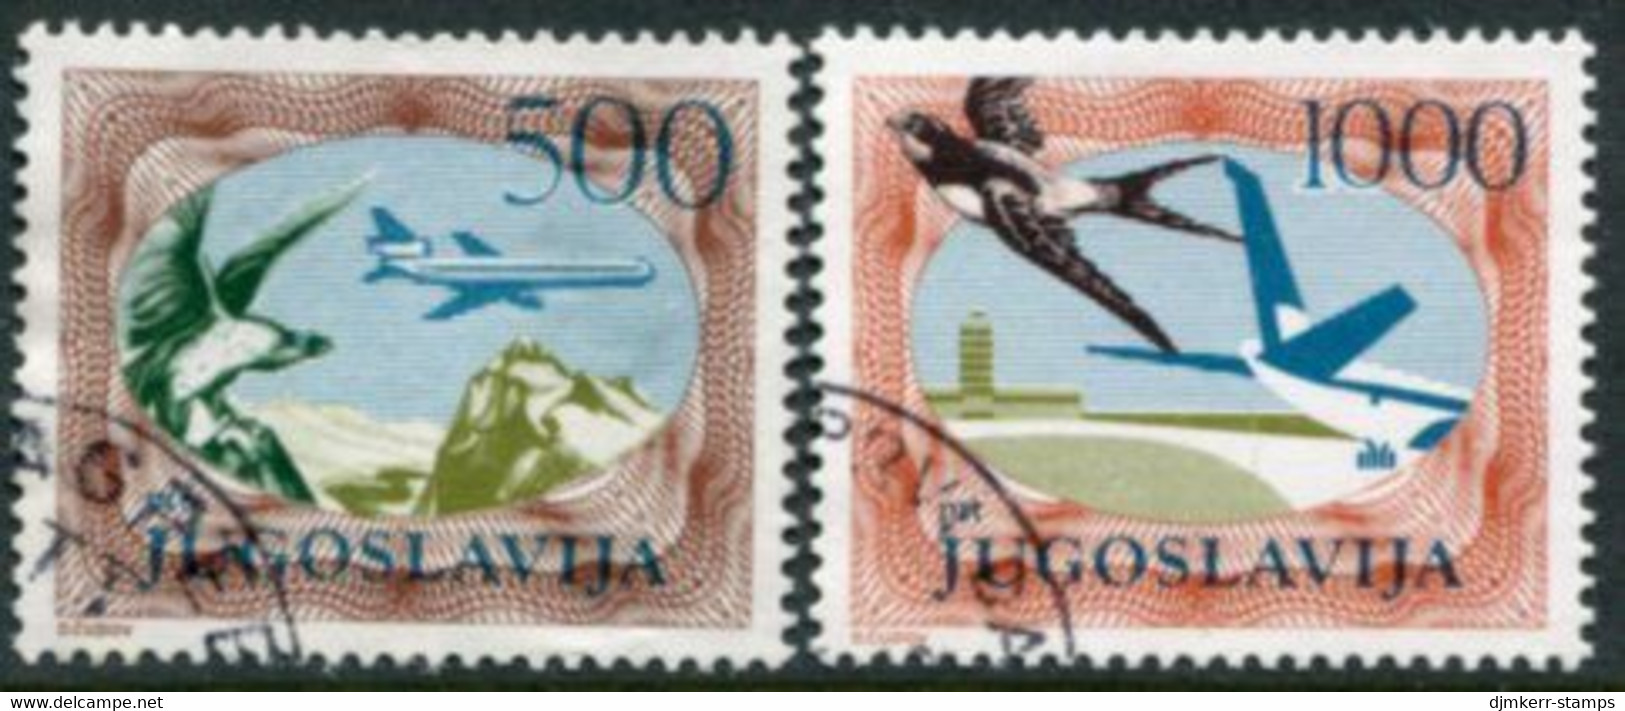 YUGOSLAVIA 1985 Airmail Definitive Perforated 12½ Used.  Michel 2098-99A - Gebruikt